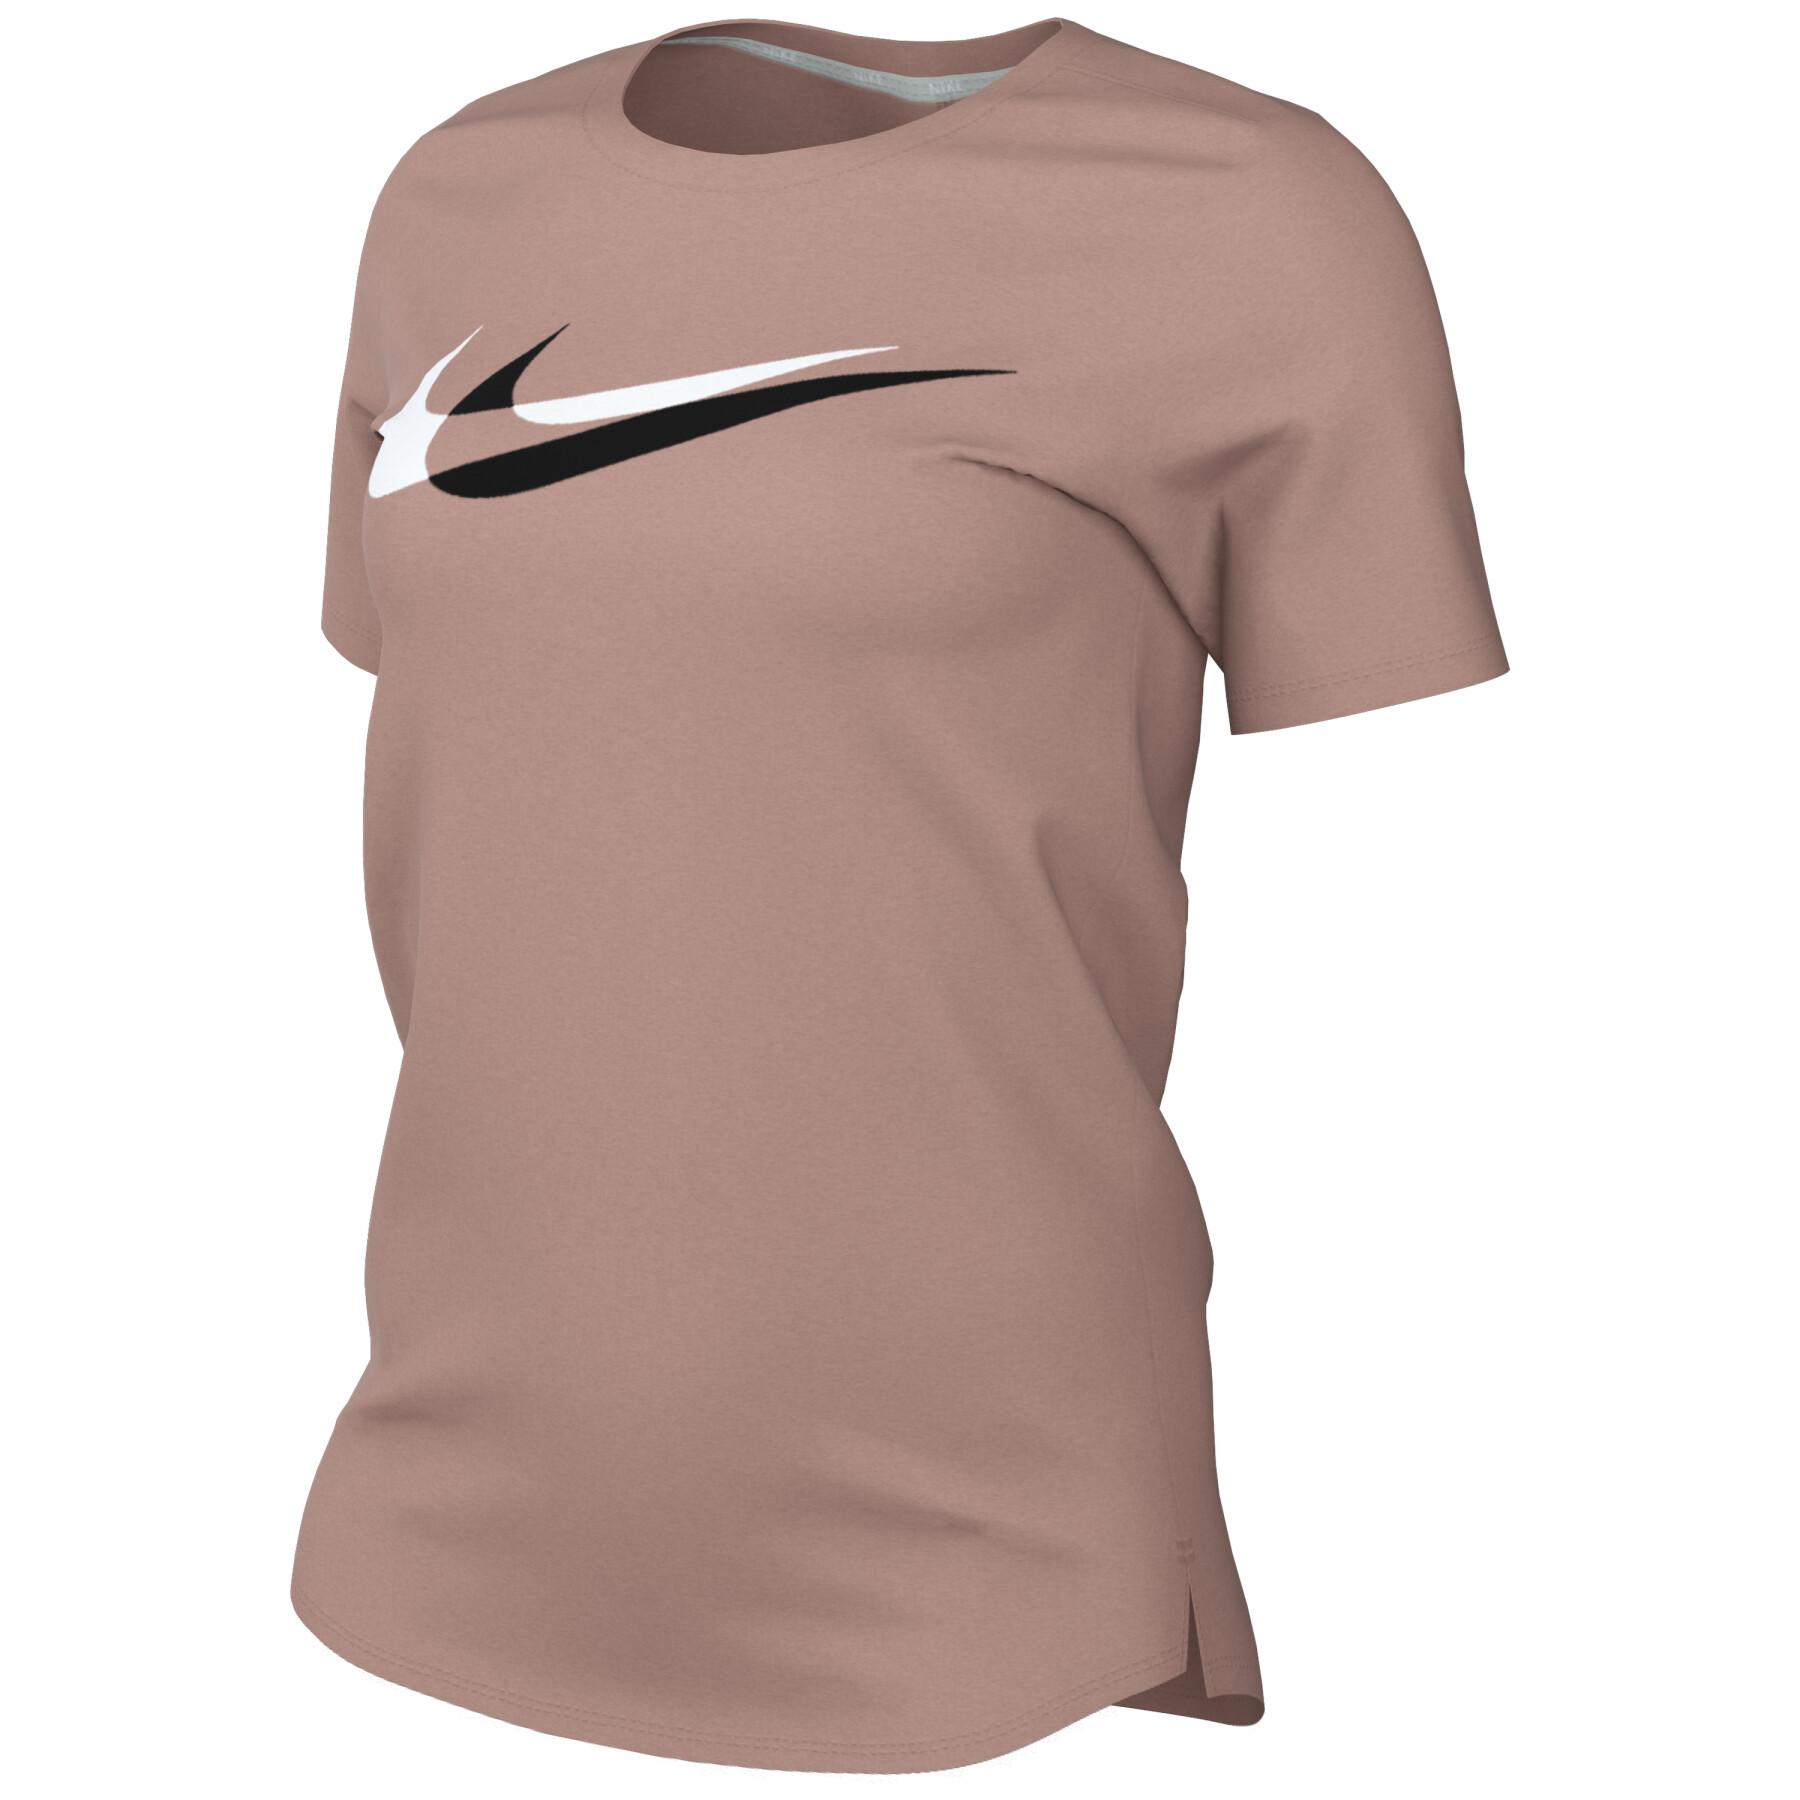 T-shirt för kvinnor Nike Dri-FIT Swoosh run